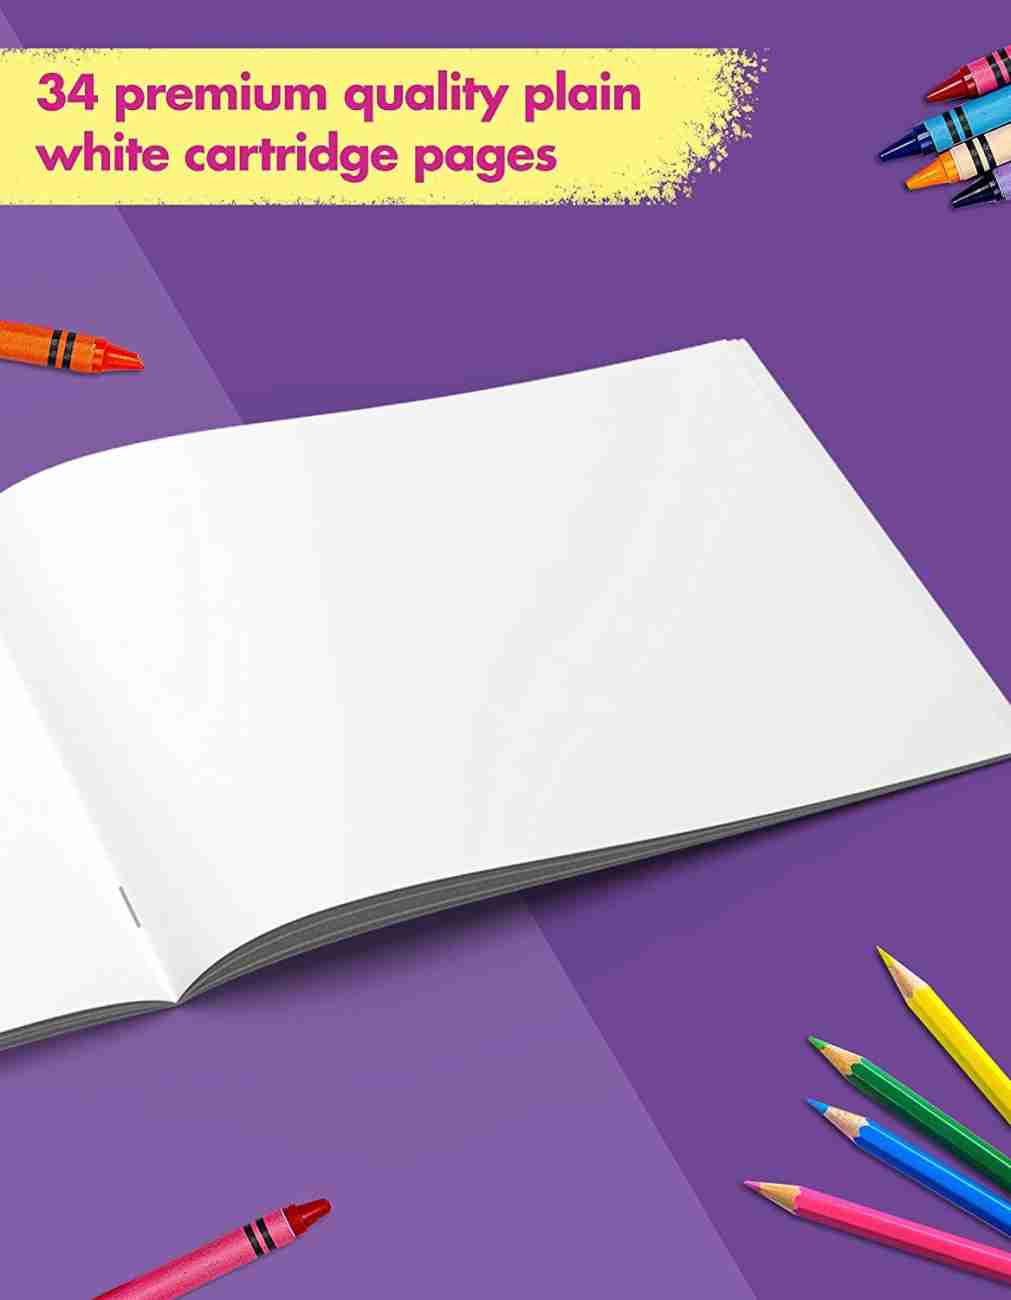 Acrylic paper pad, 42 x 29.7 cm (A3), 350 g, 20 sheets